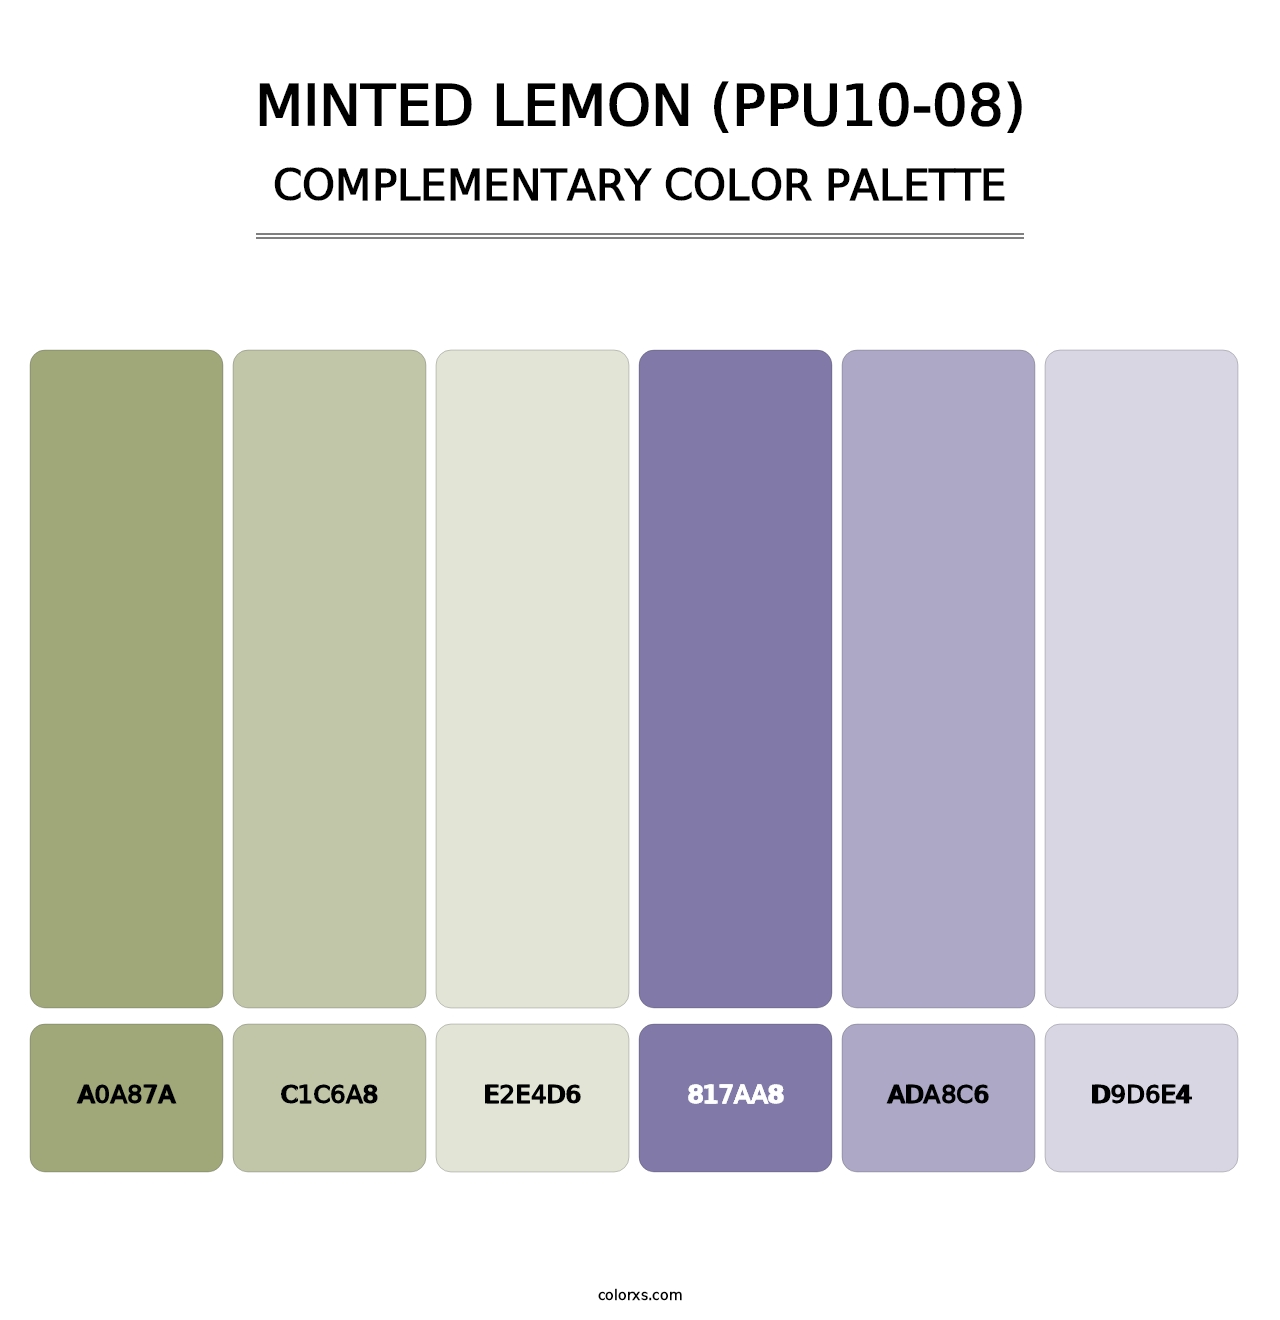 Minted Lemon (PPU10-08) - Complementary Color Palette